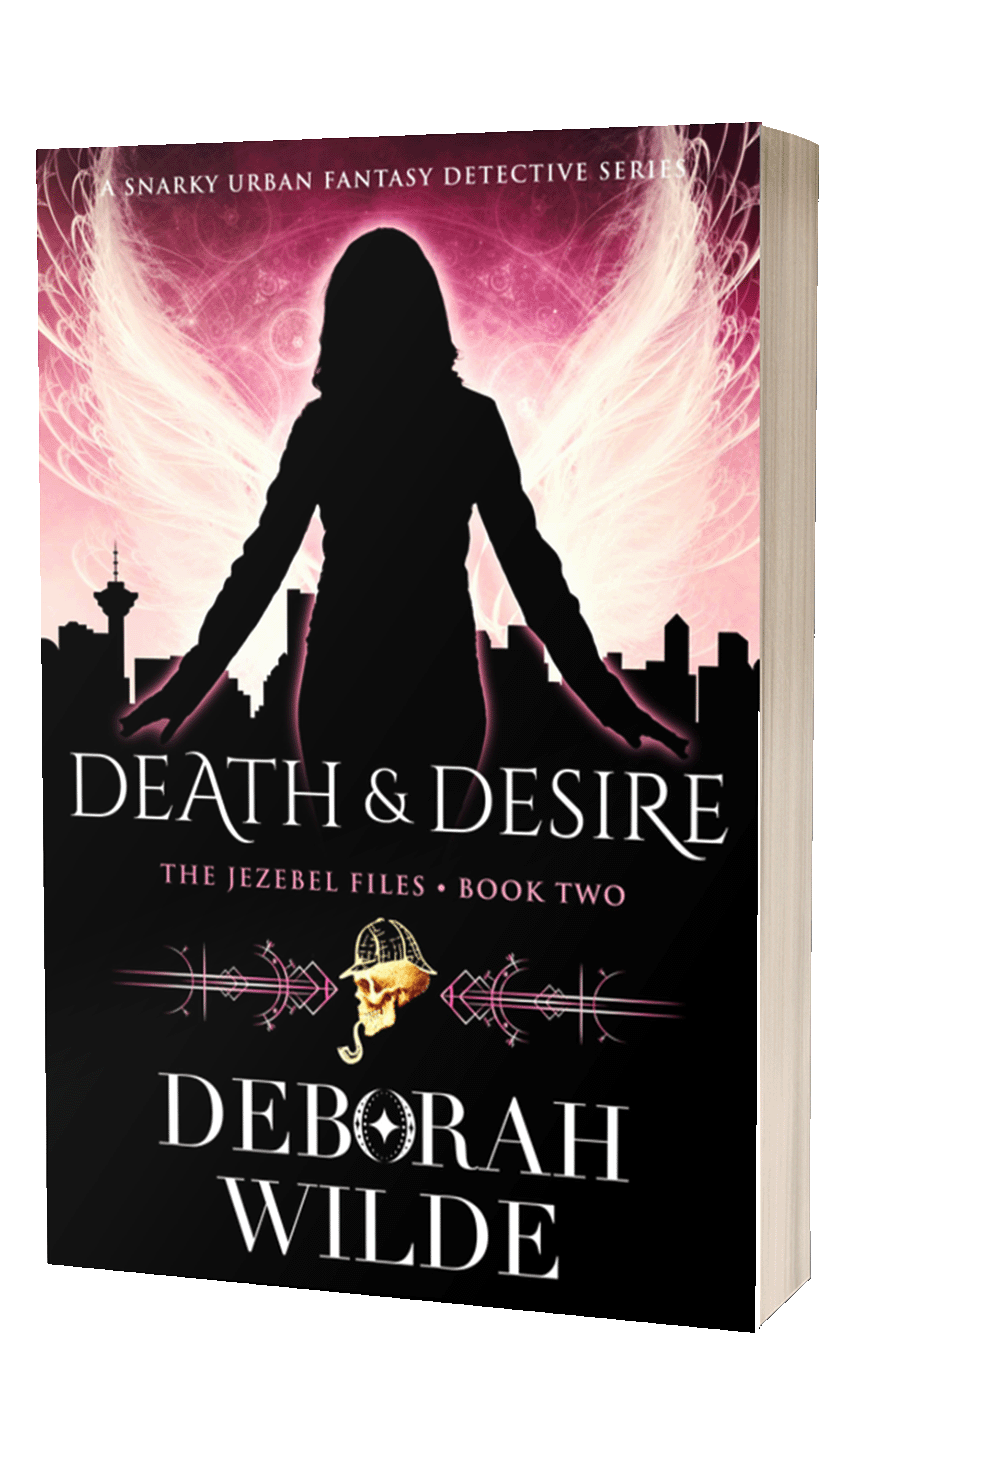 Paperback of Death & Desire book 2 in The Jezebel Files, an urban fantasy detective fiction by Deborah Wilde.